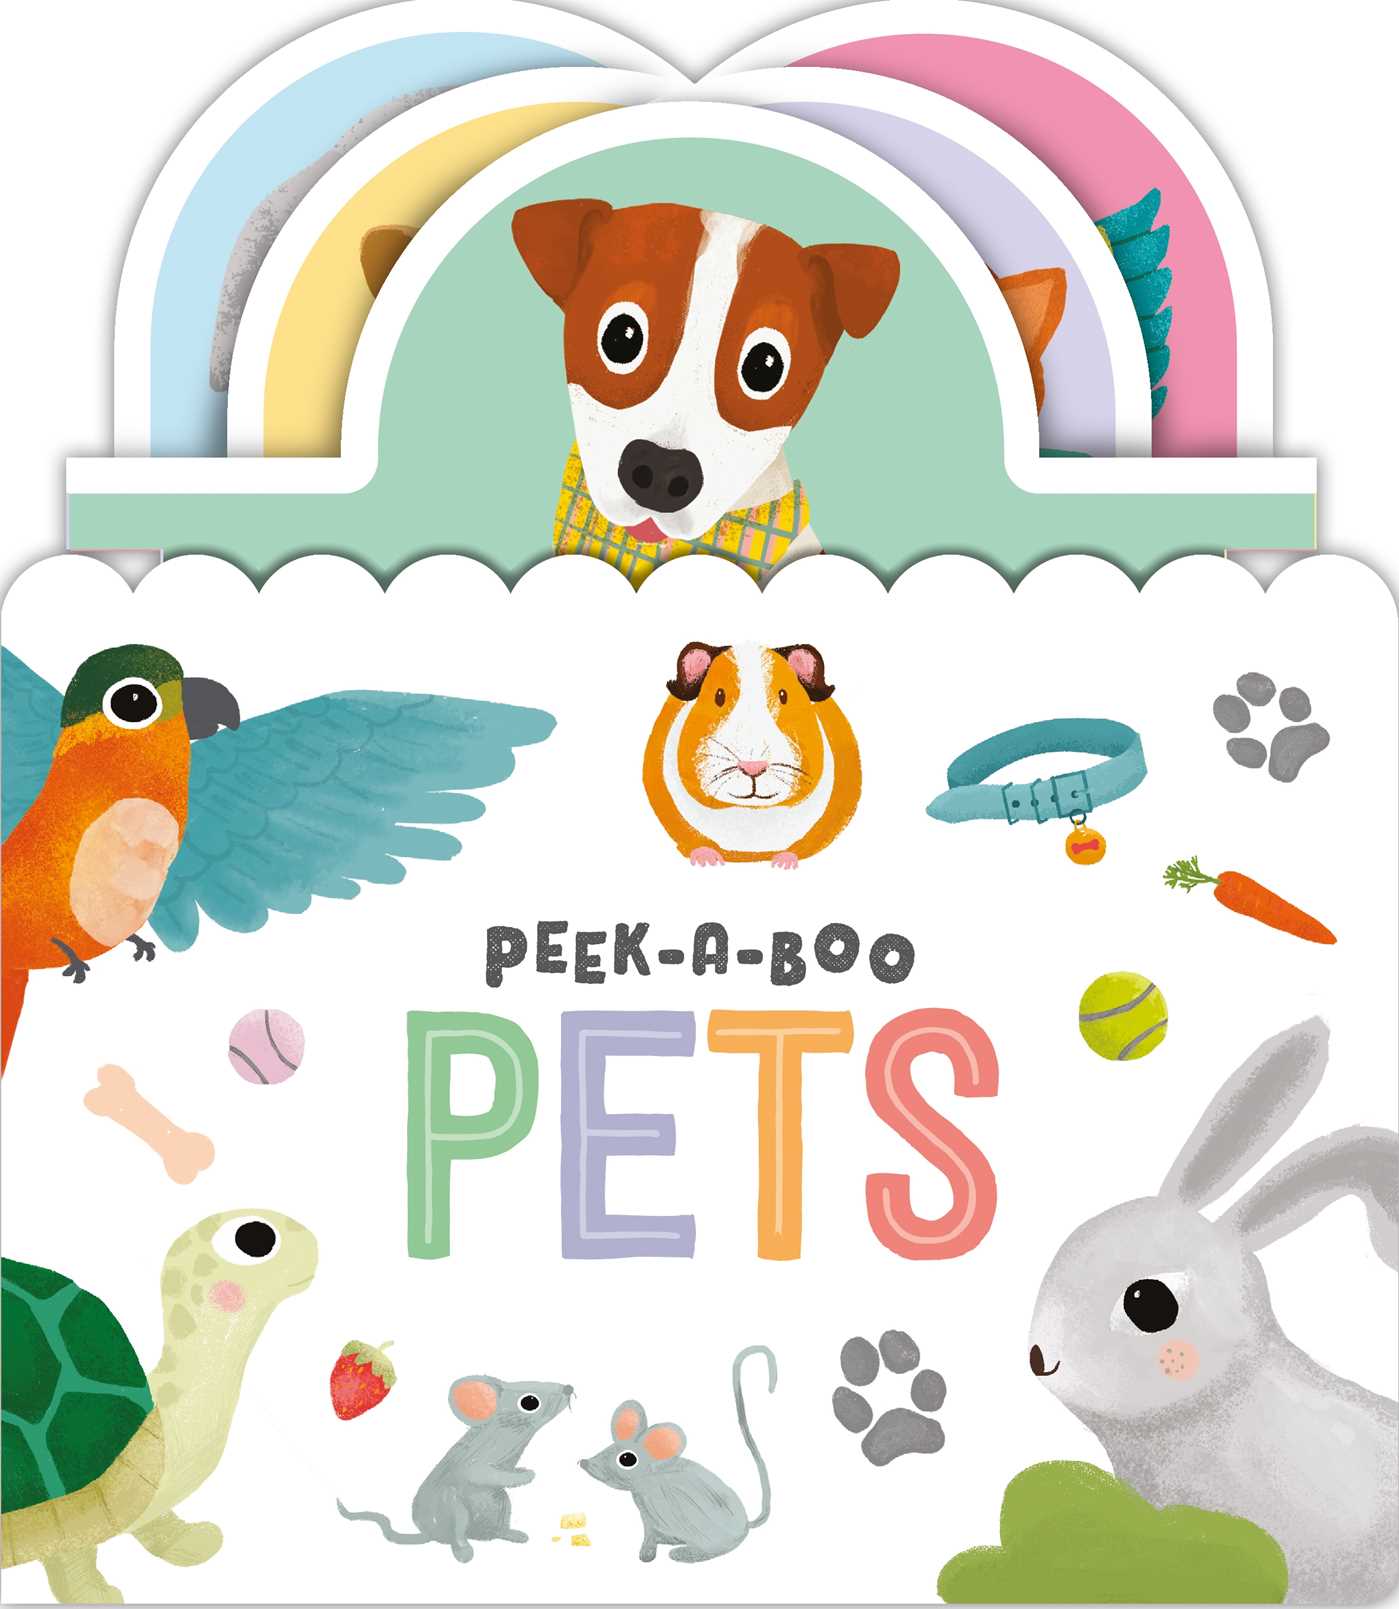 Peek-a-Boo Pets | IglooBooks